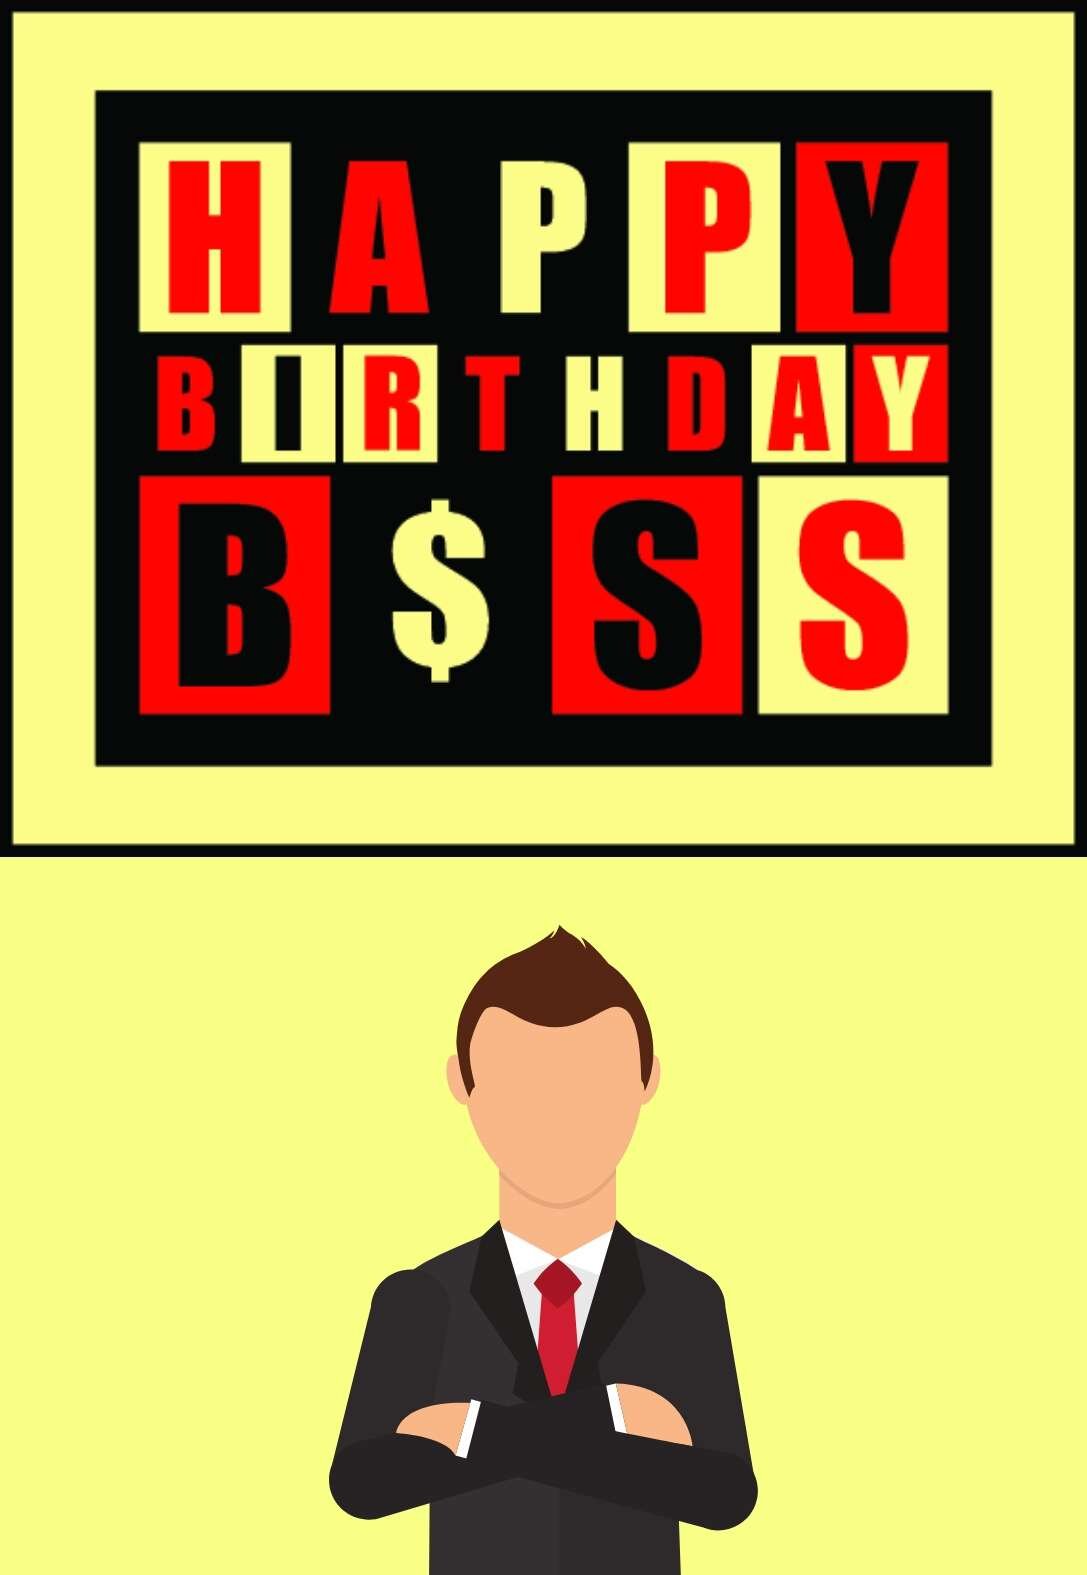 Boss Printable Birthday Cards PRINTBIRTHDAY CARDS